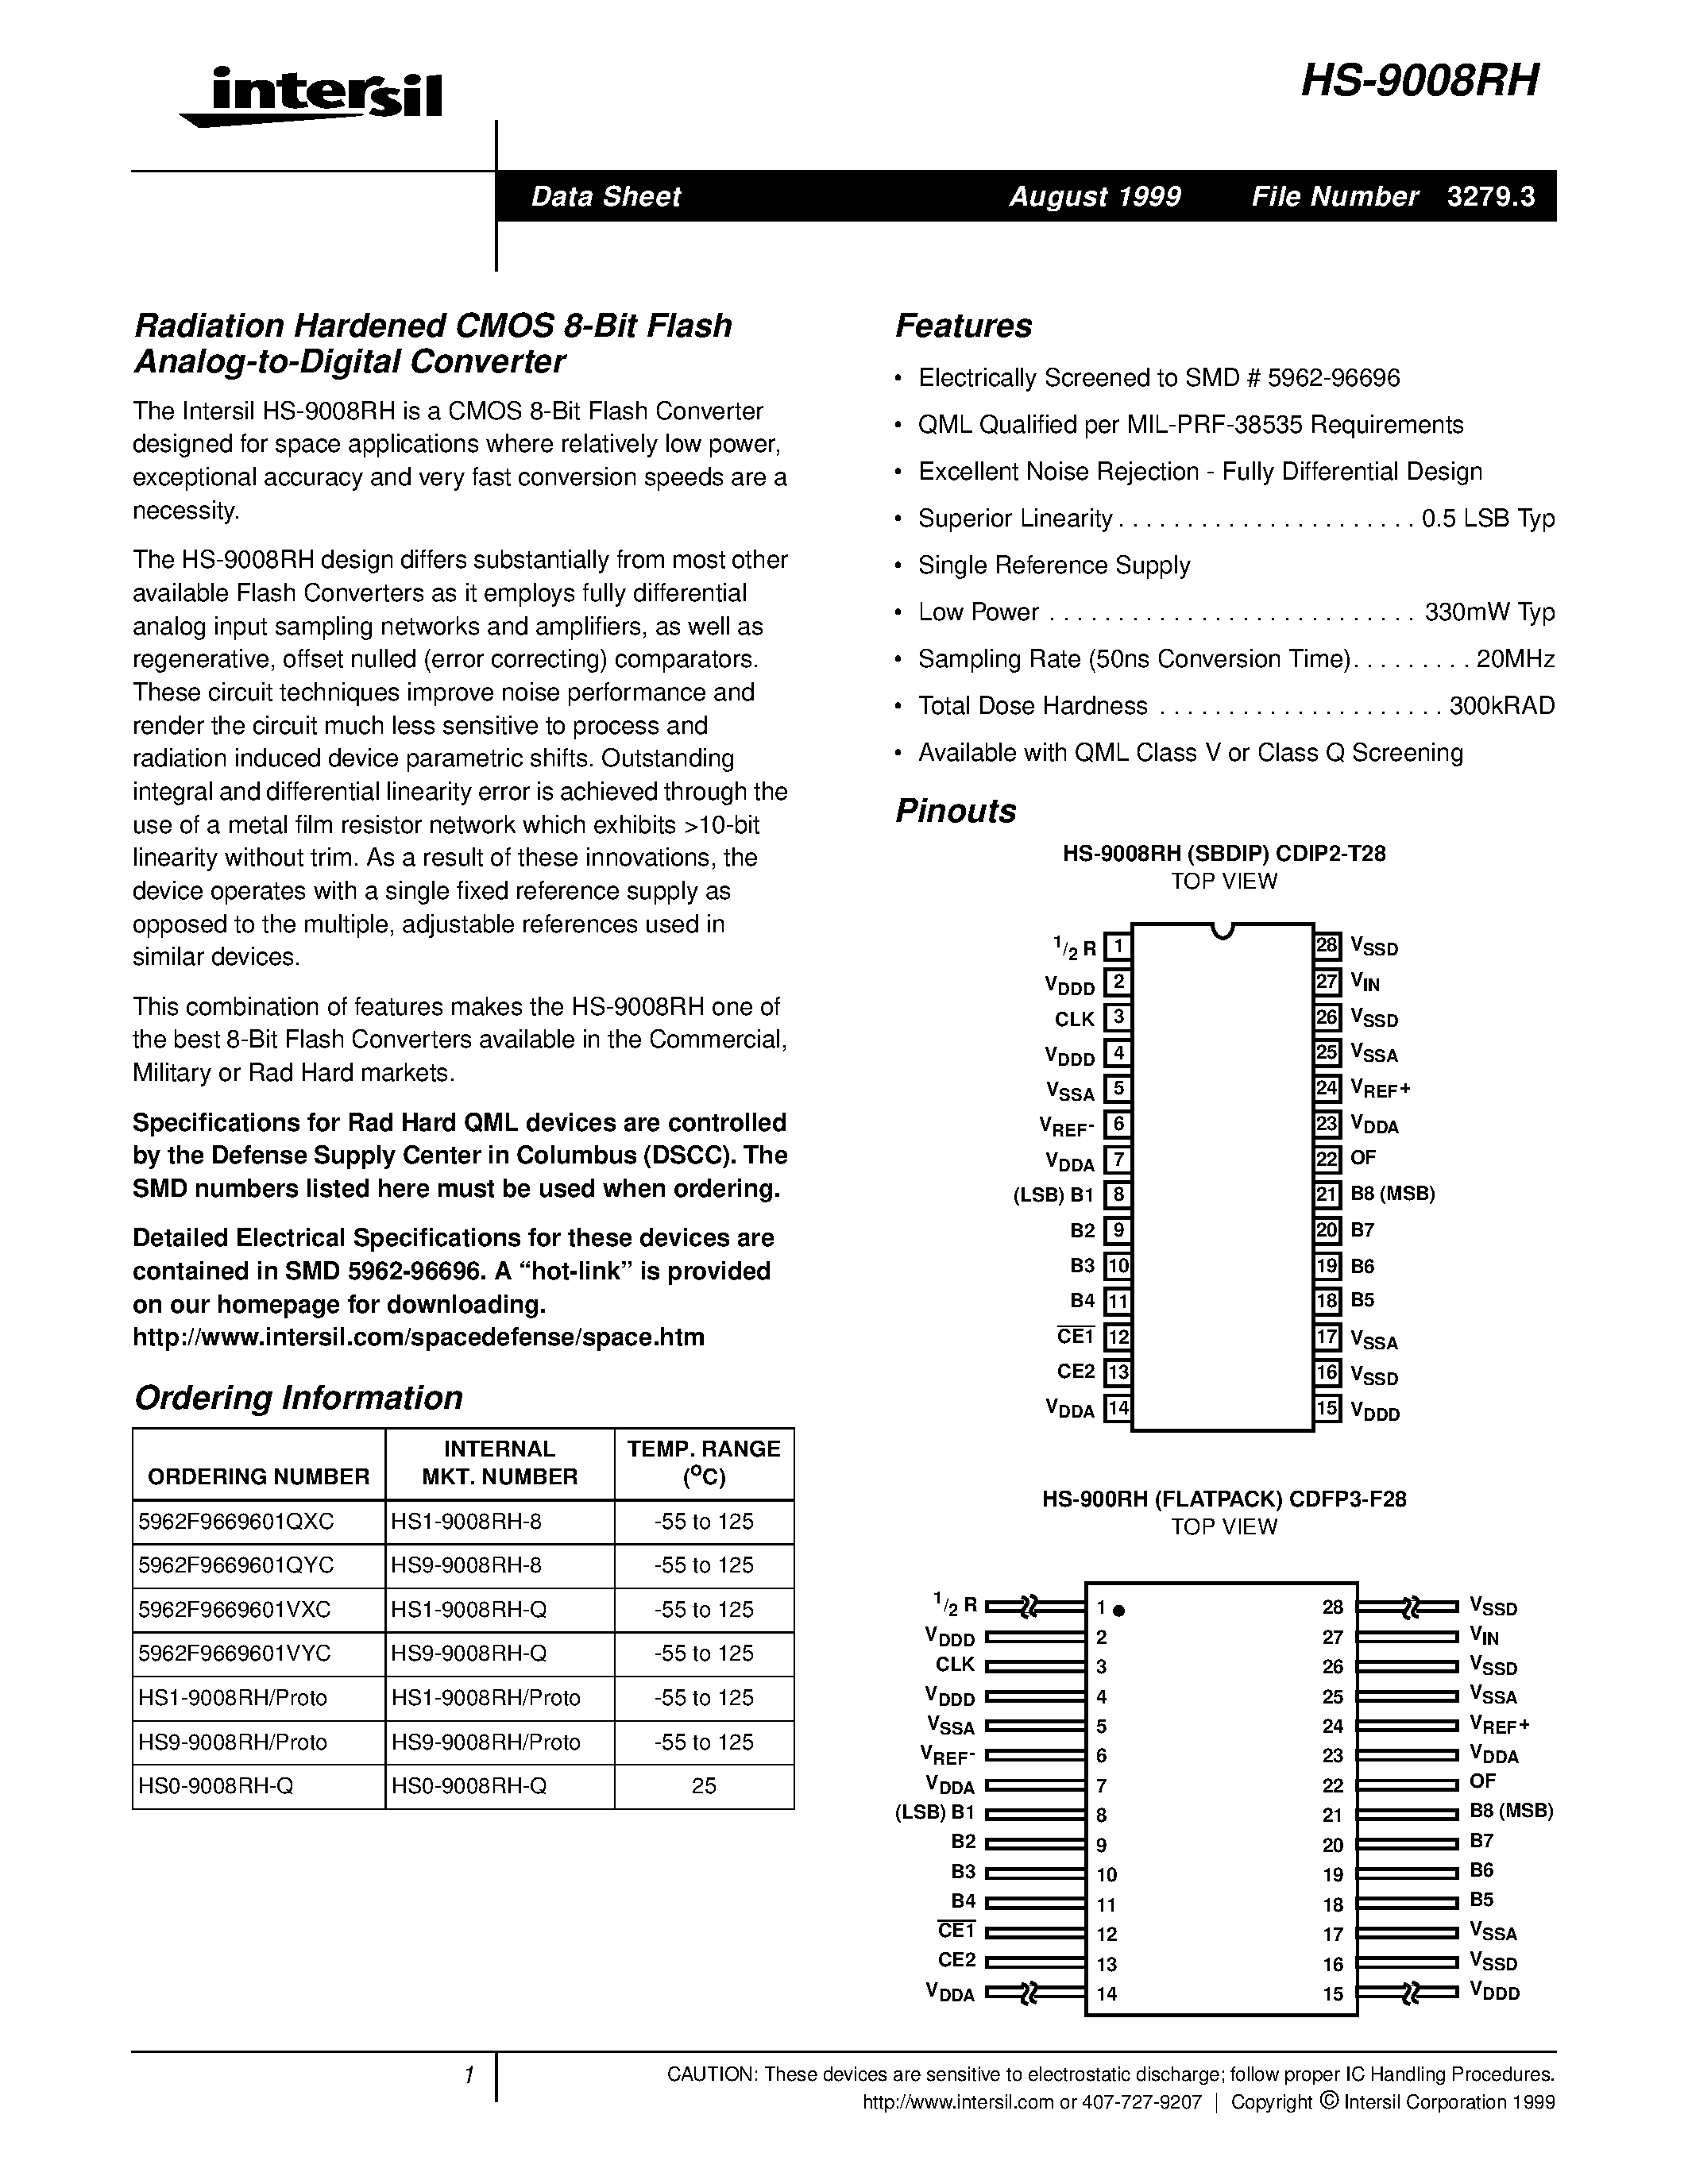 Datasheet HS1-9008RH-8 - Radiation Hardened CMOS 8-Bit Flash Analog-to-Digital Converter page 1